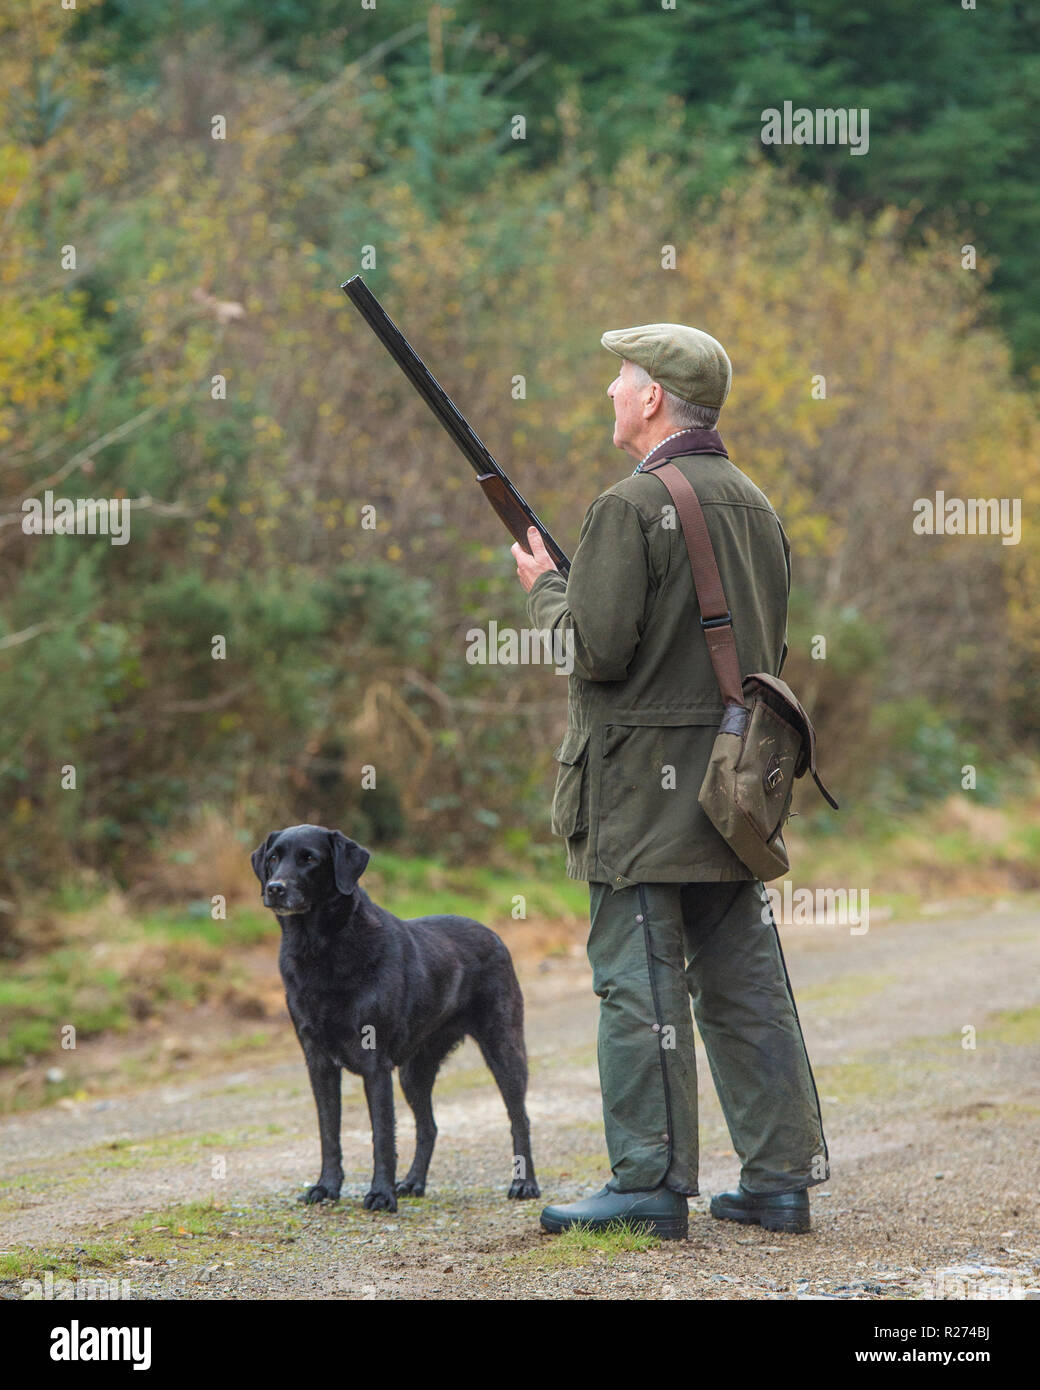 man shooting pheasants and his Labrador dog Stock Photo